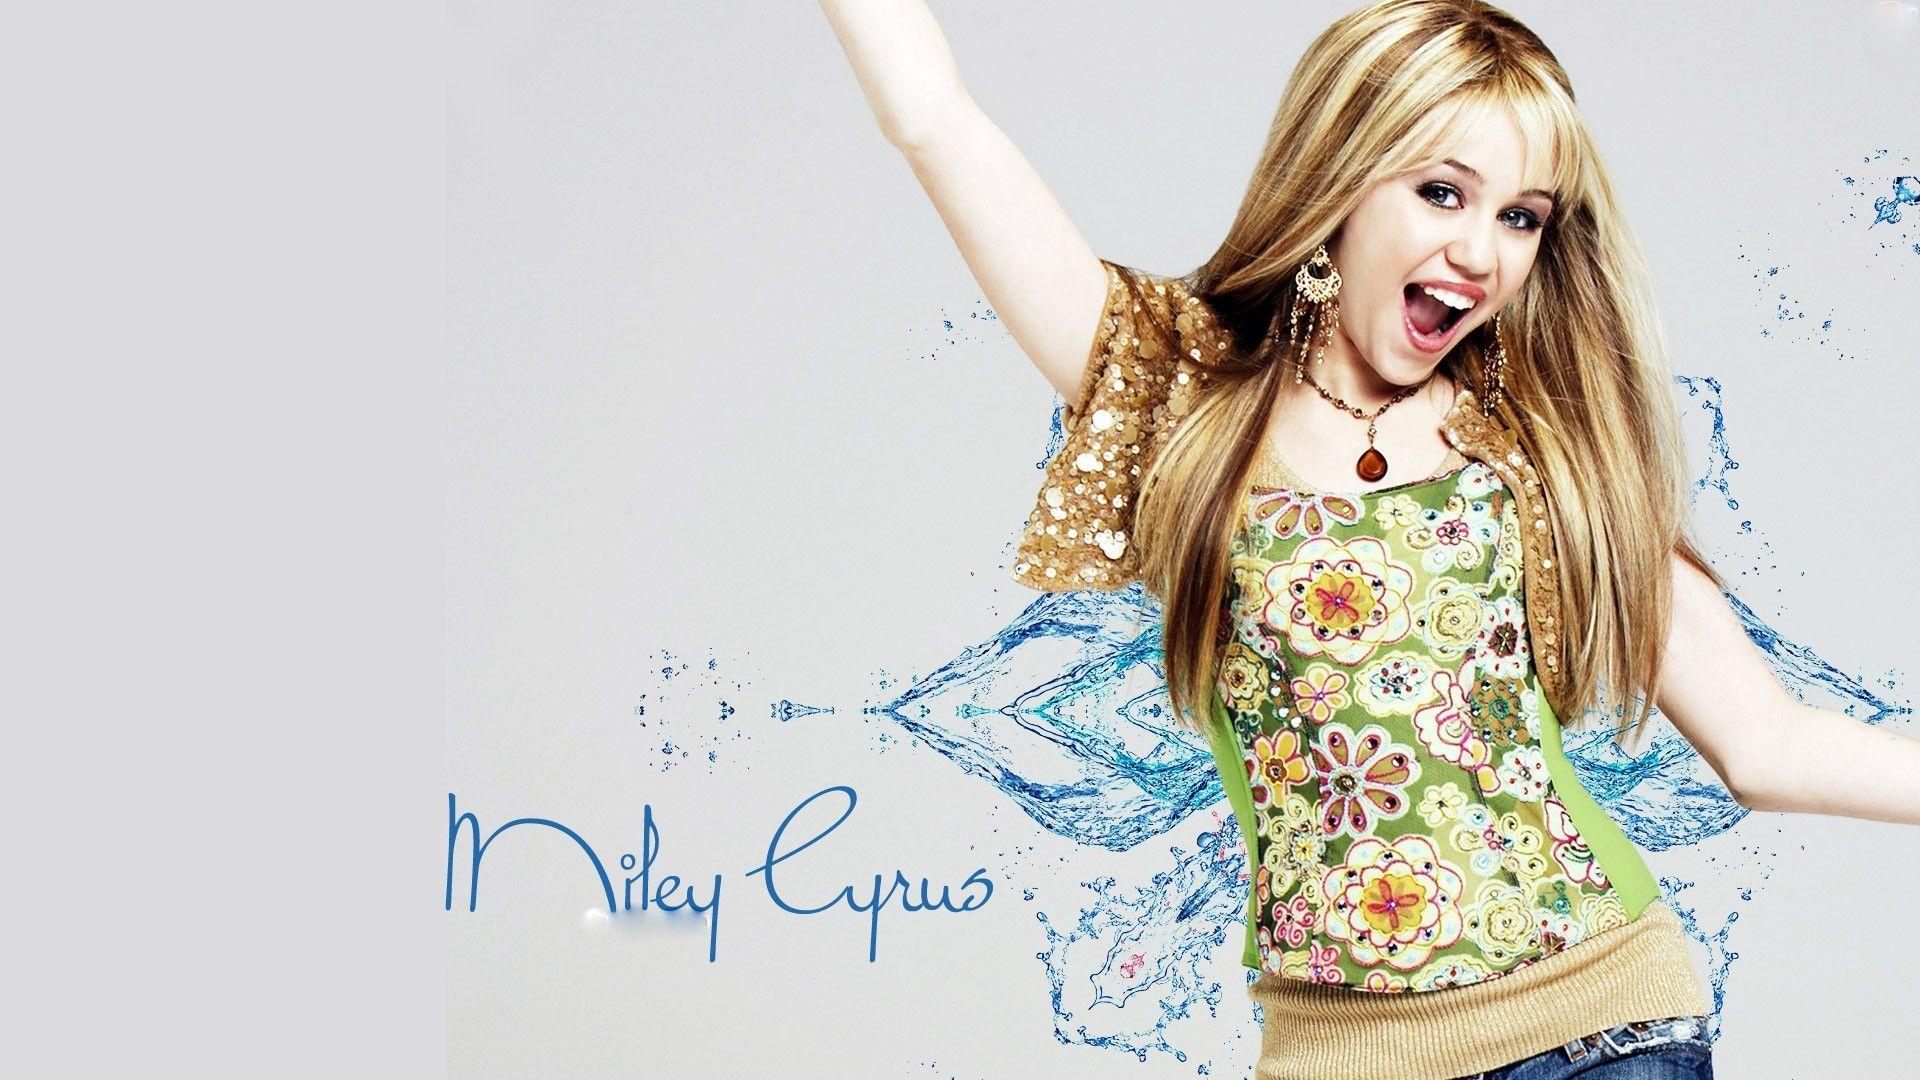 Miley Cyrus HD Wallpaper Beautiful Photo American Singer Image